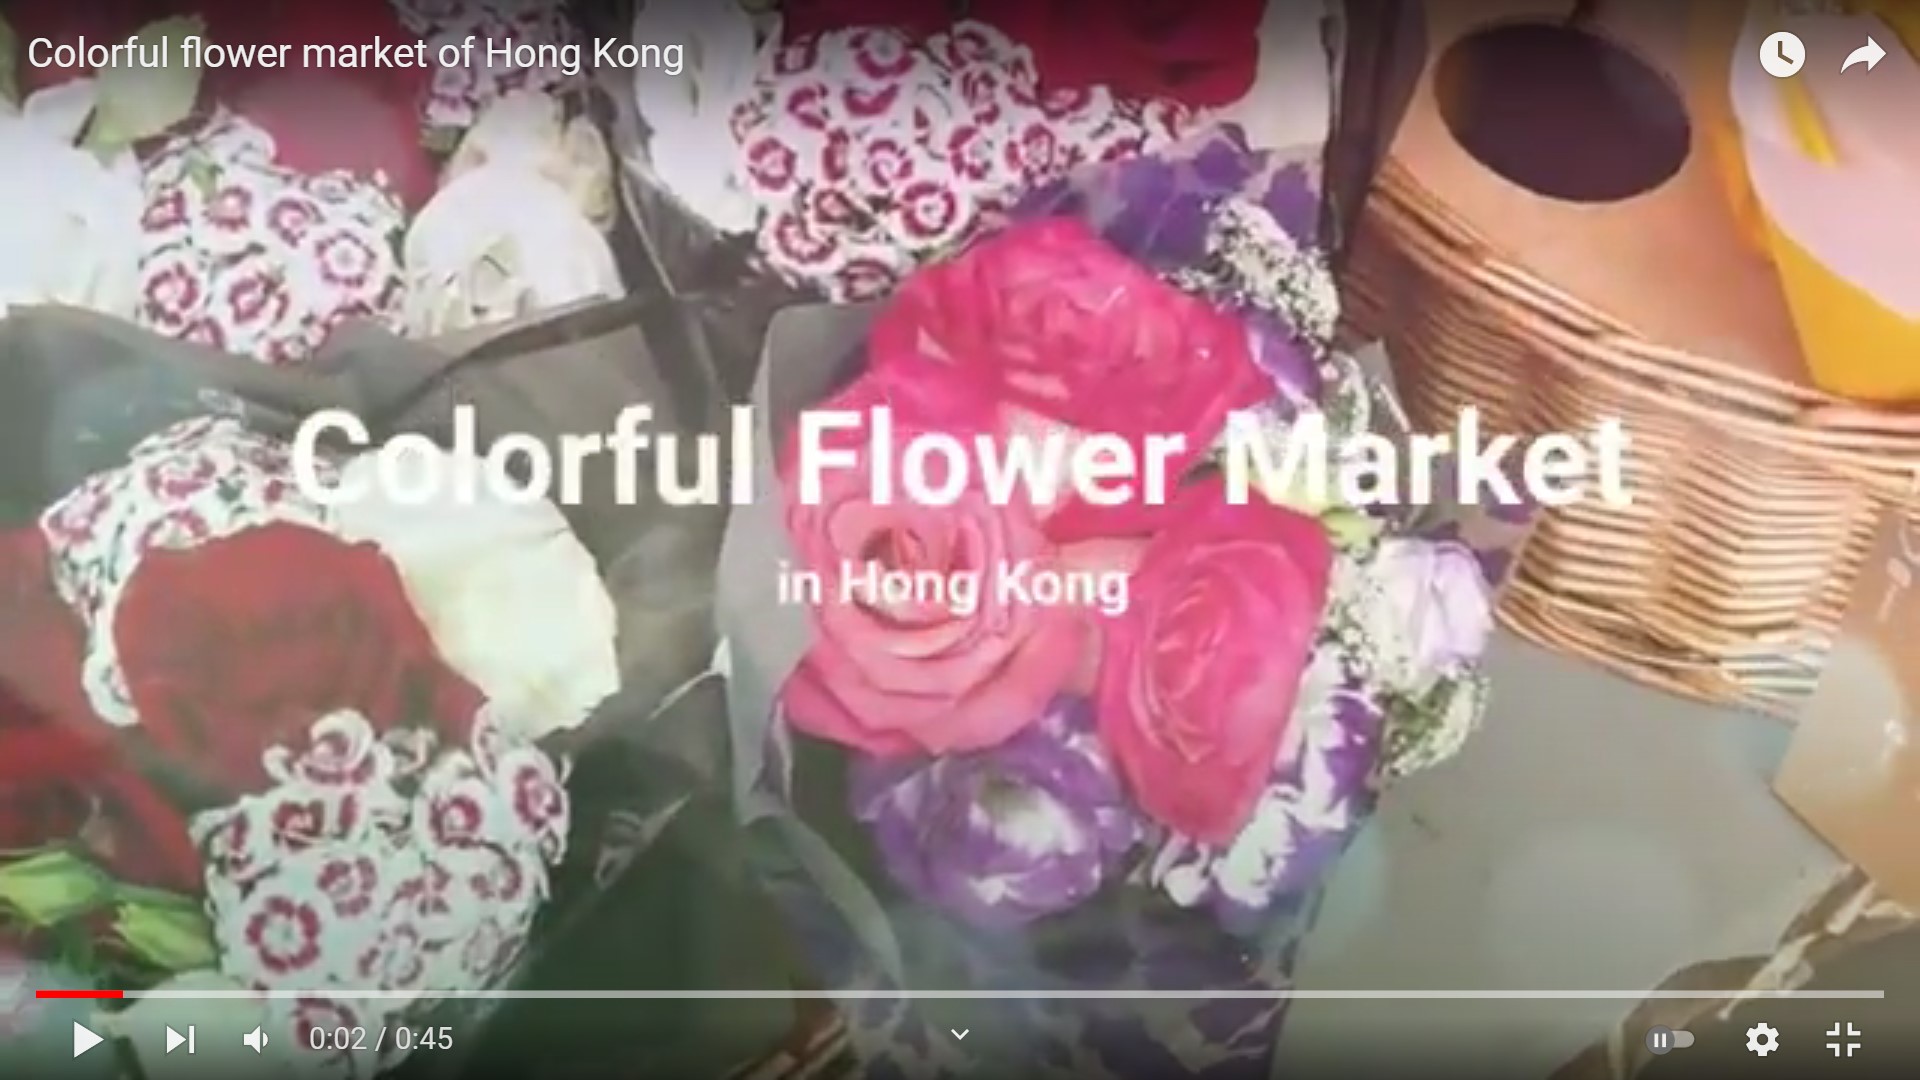 Frank’s “Colorful flower market of Hong Kong” snapshots video